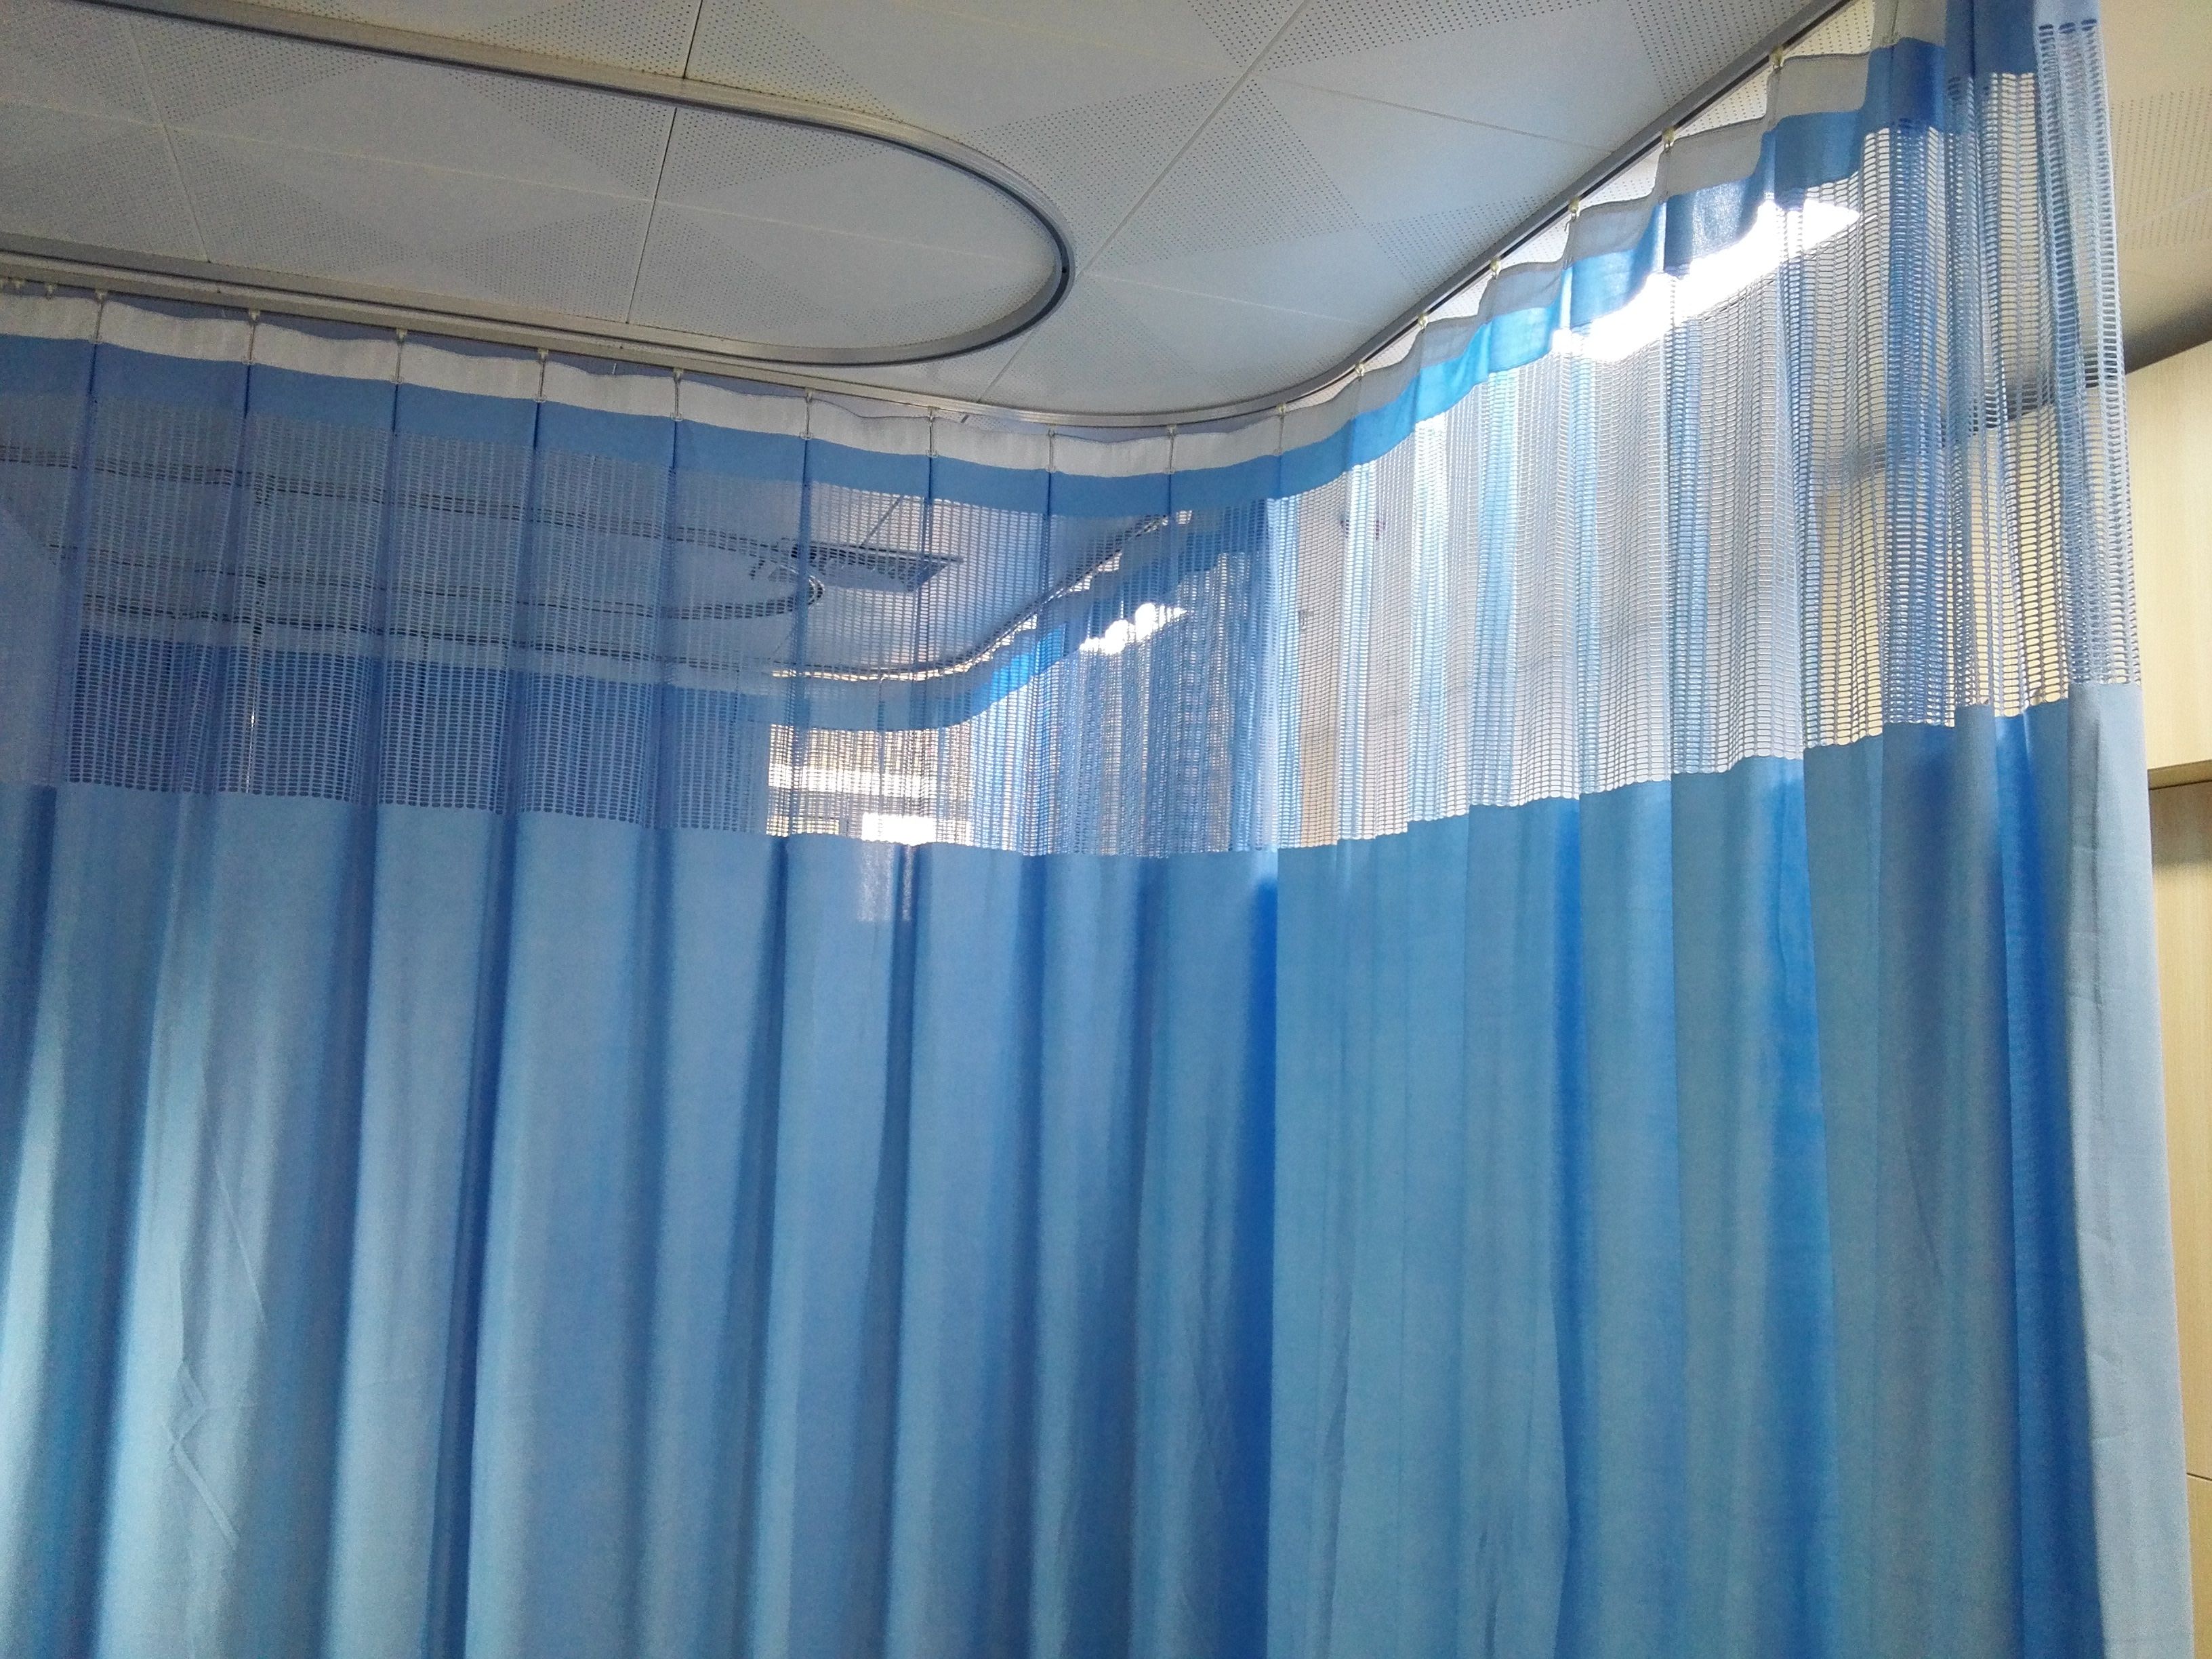 Medical curtain fabric